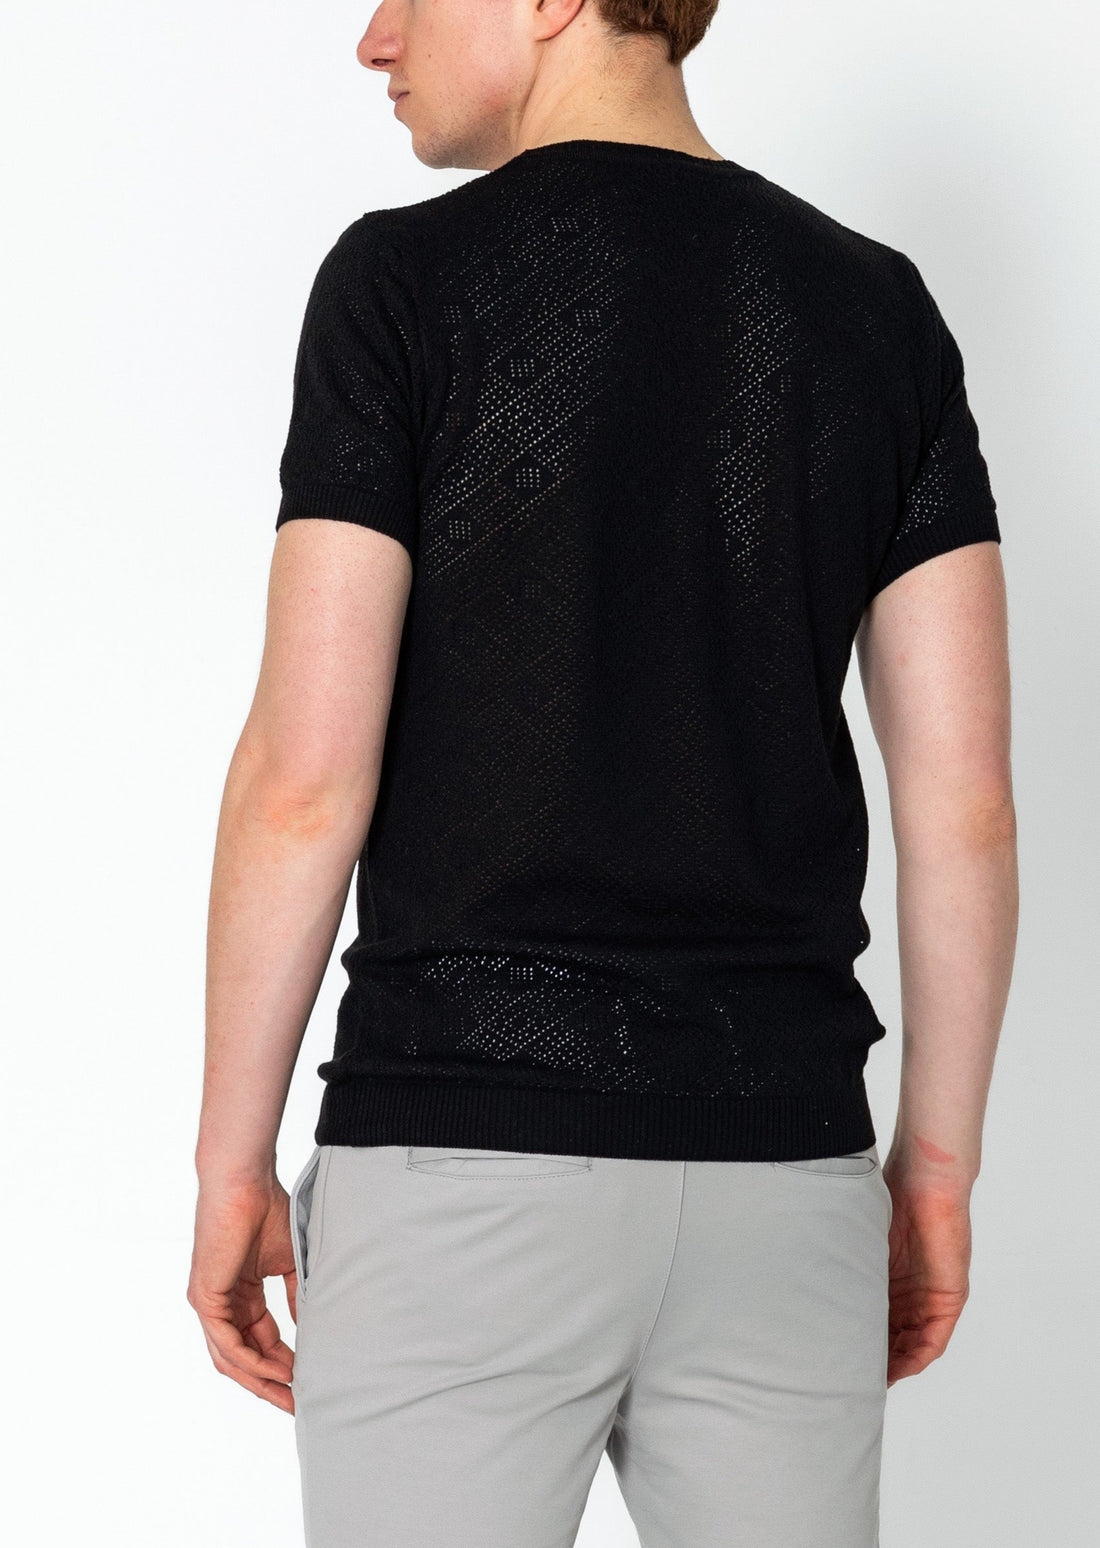 Geometric Crochet Knit Top - Black